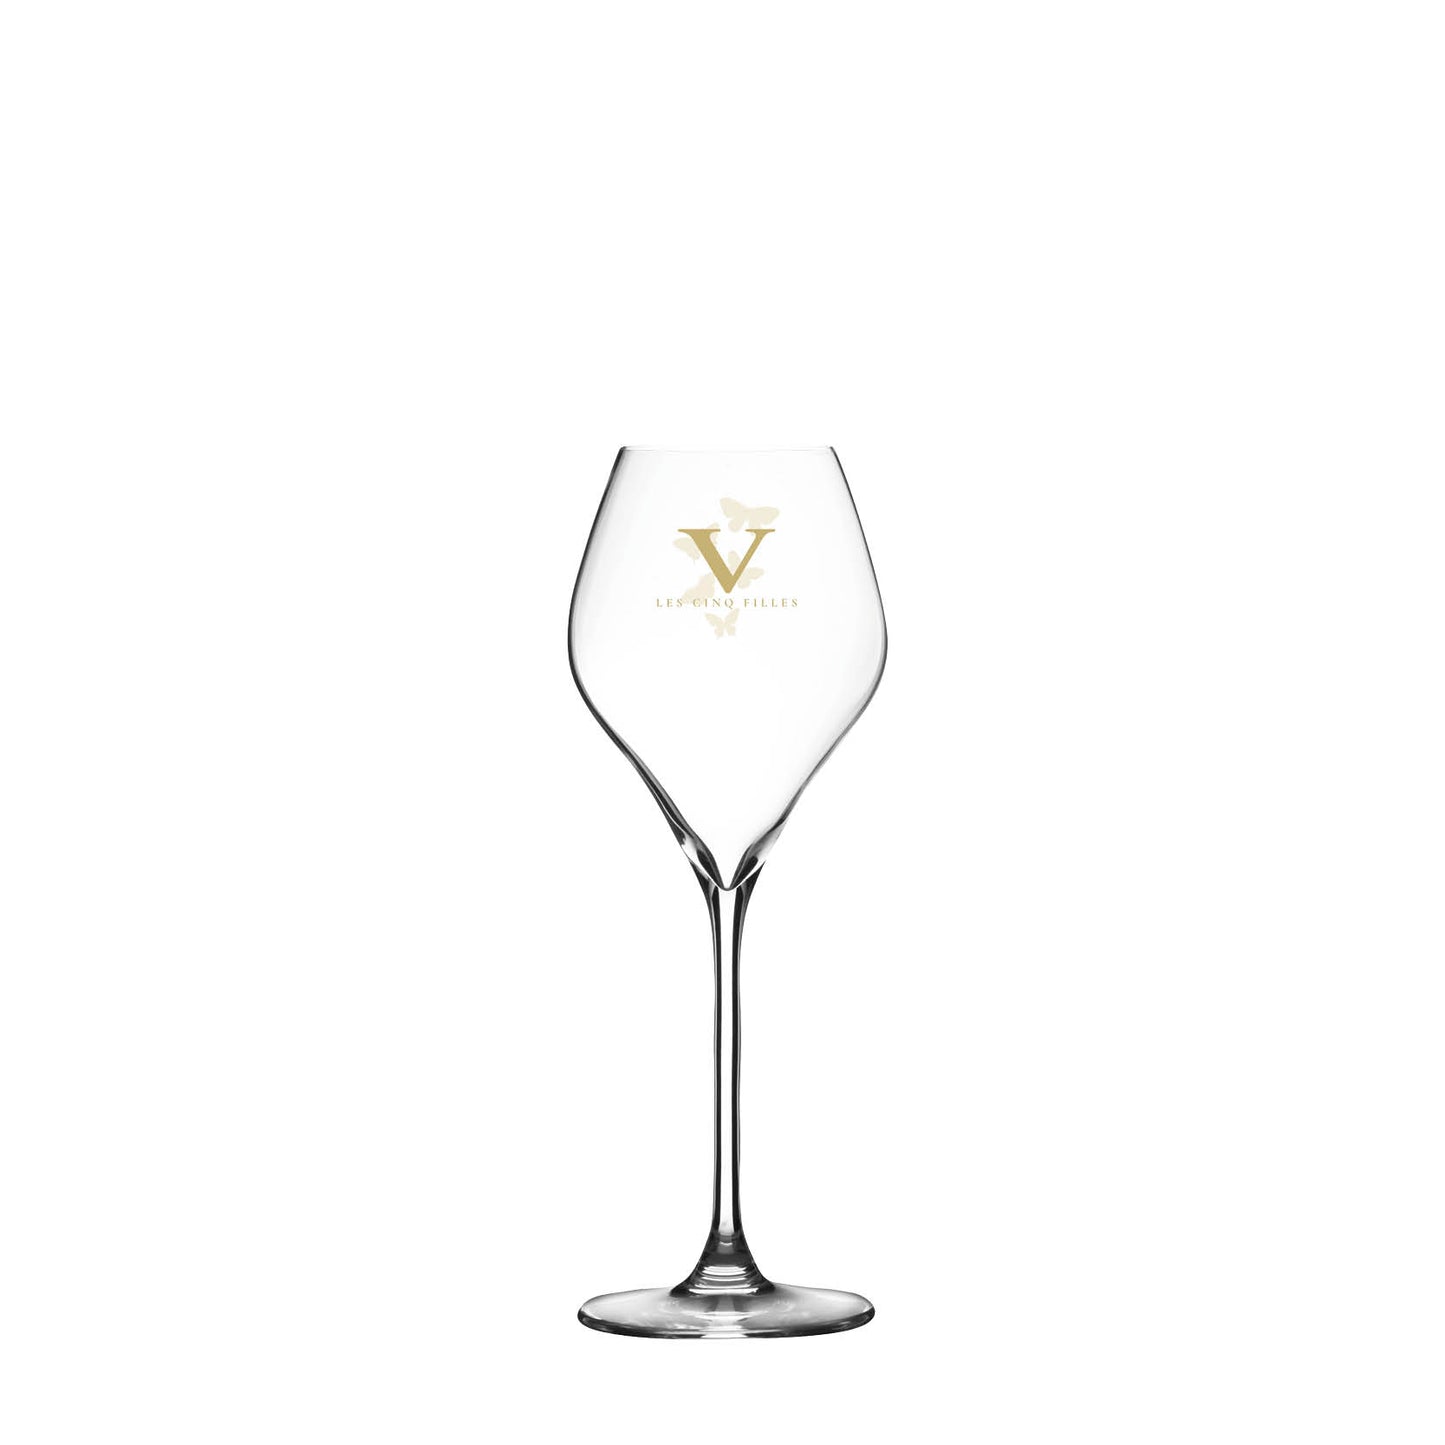 Filles Cinq Les Champagne all – YSC